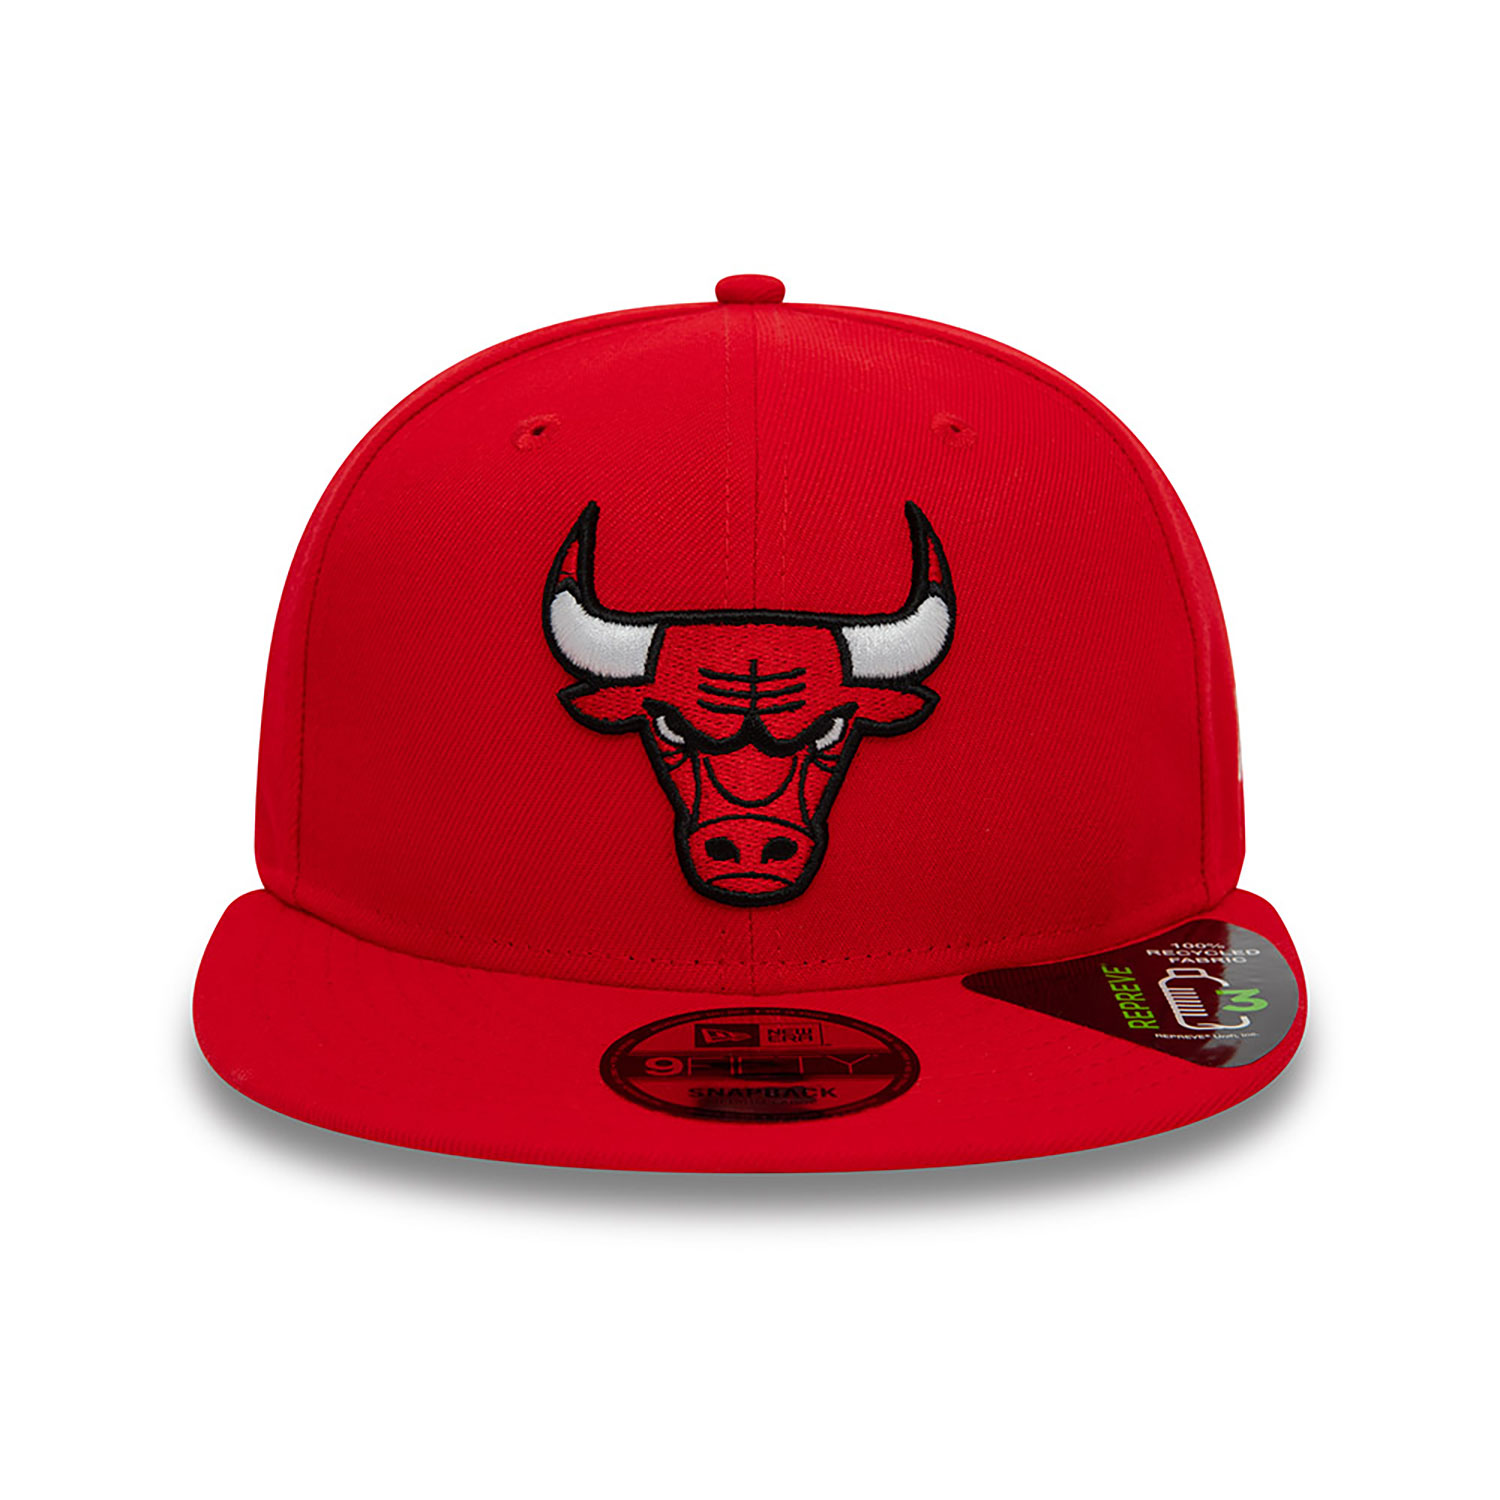 Chicago Bulls NBA Repreve Red 9FIFTY Snapback Cap